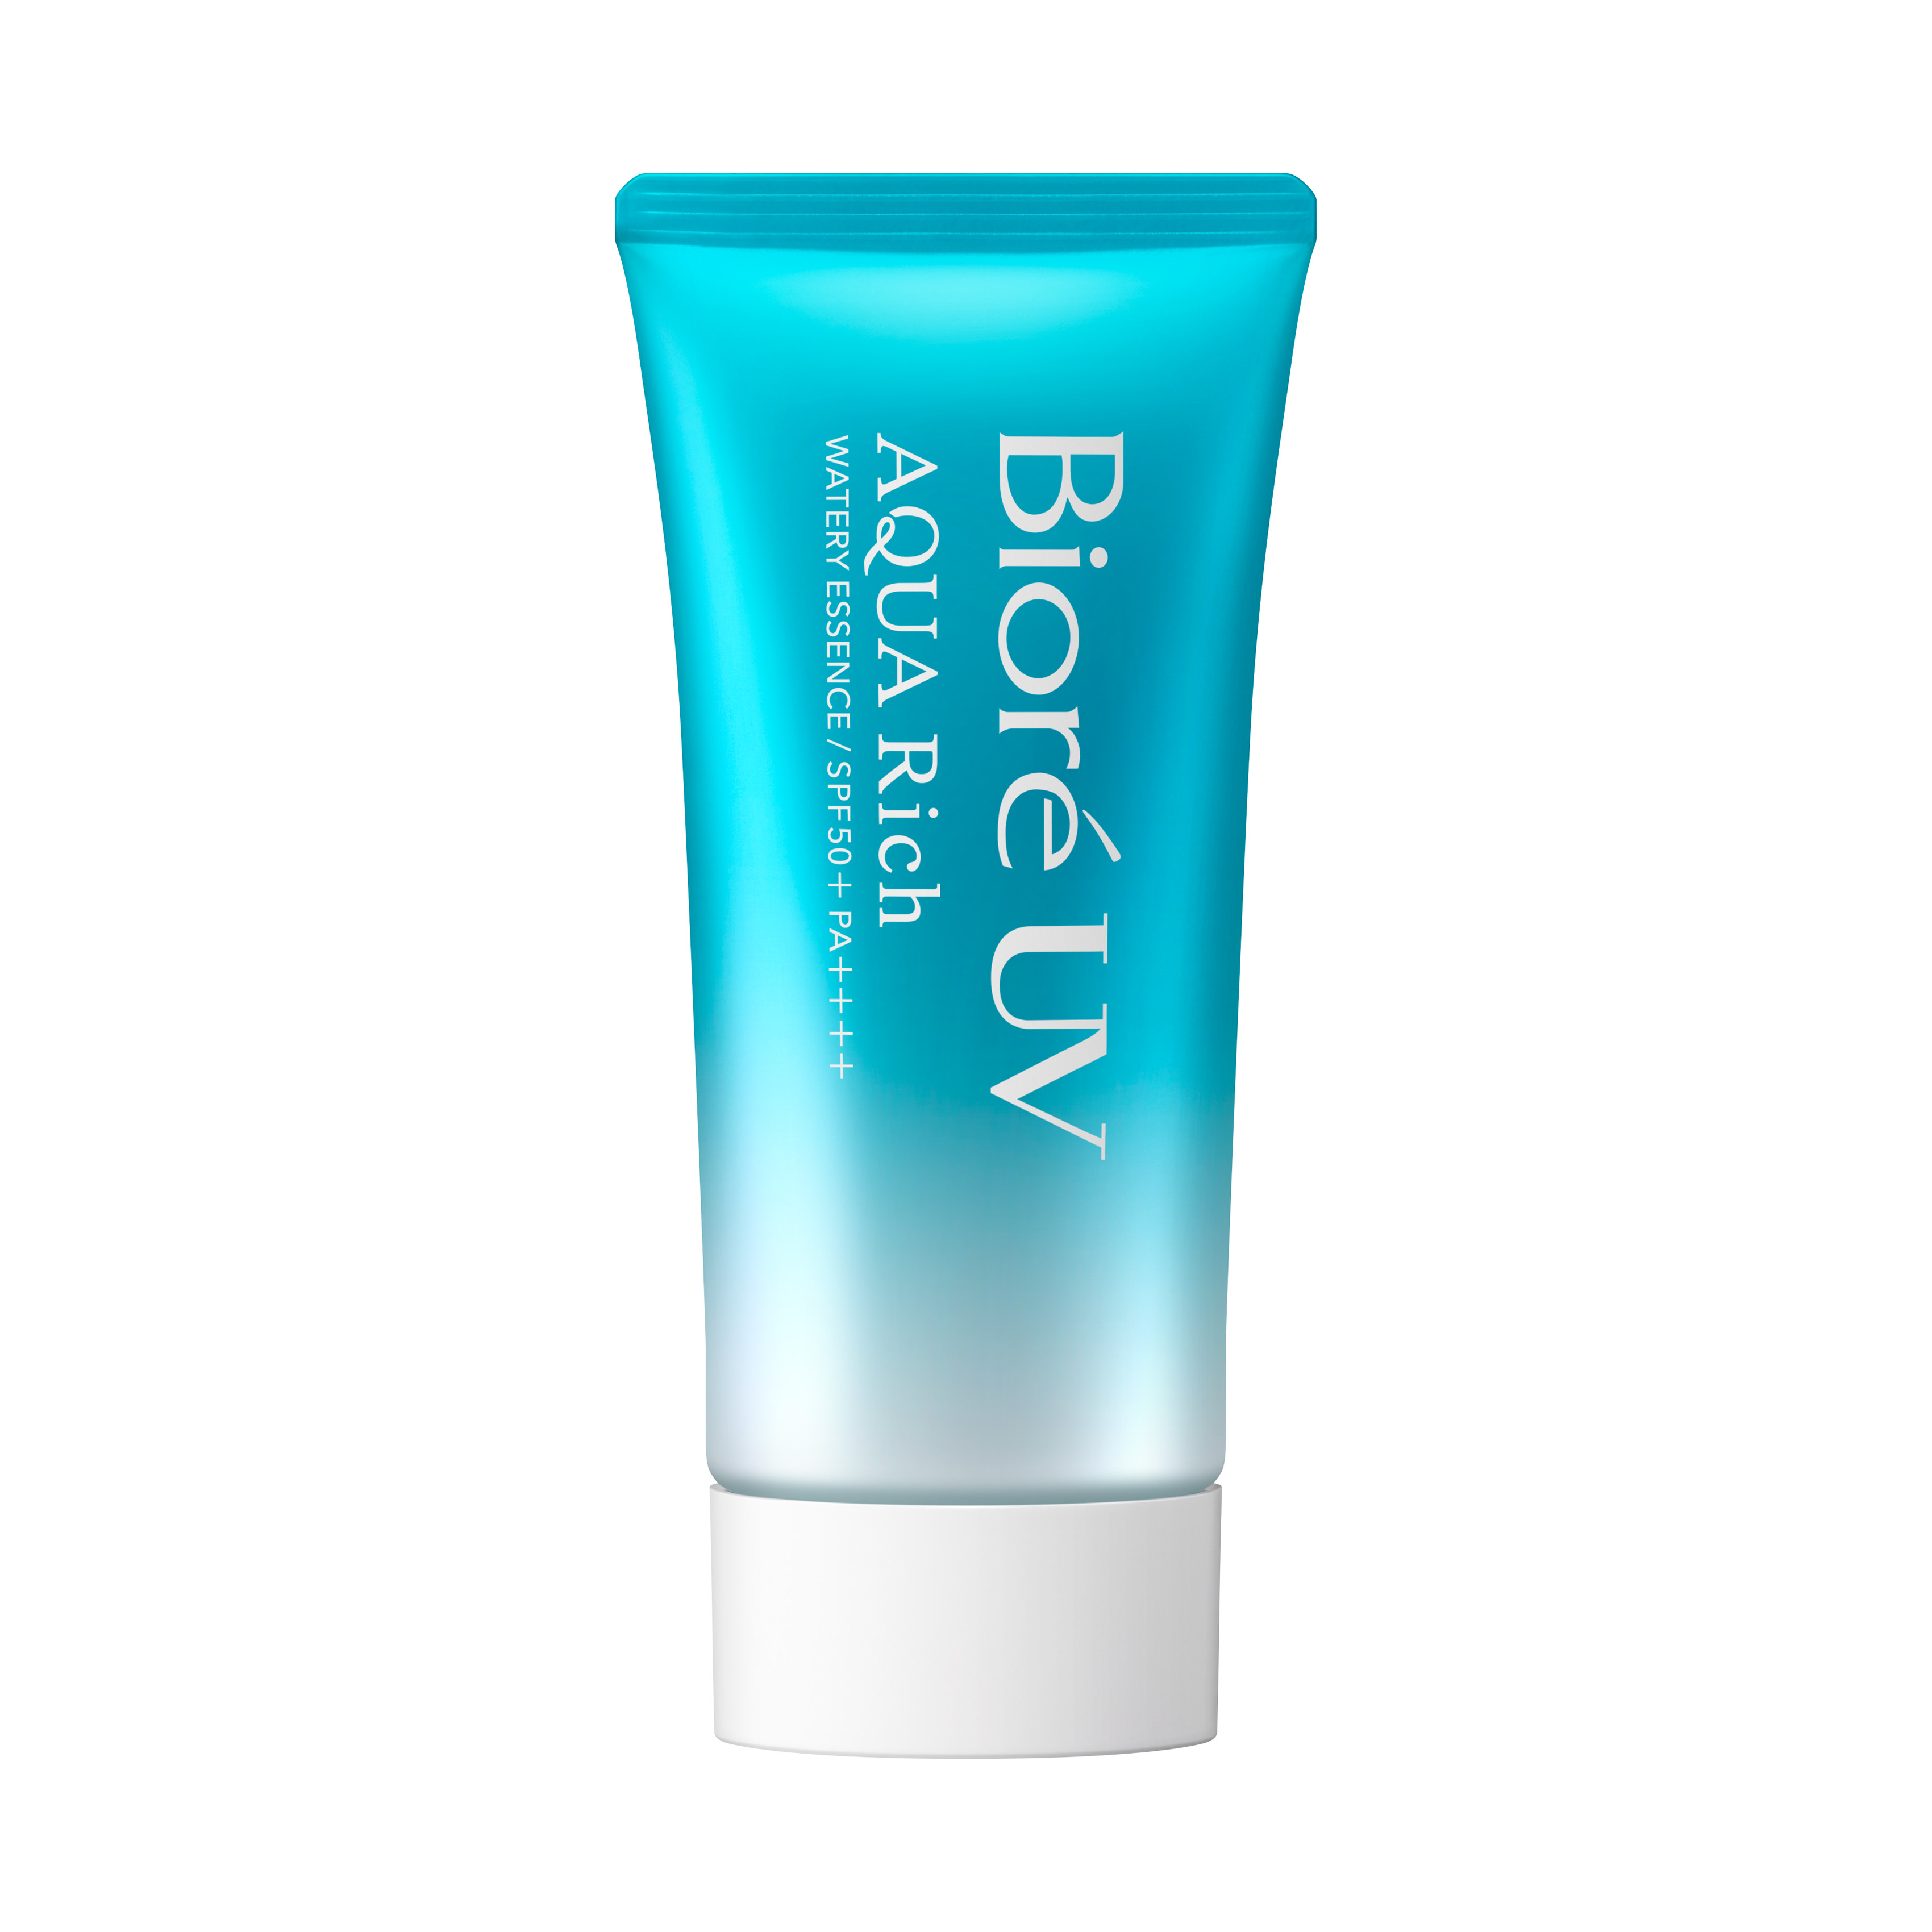 Biore UV Aqua Rich Watery Essence with